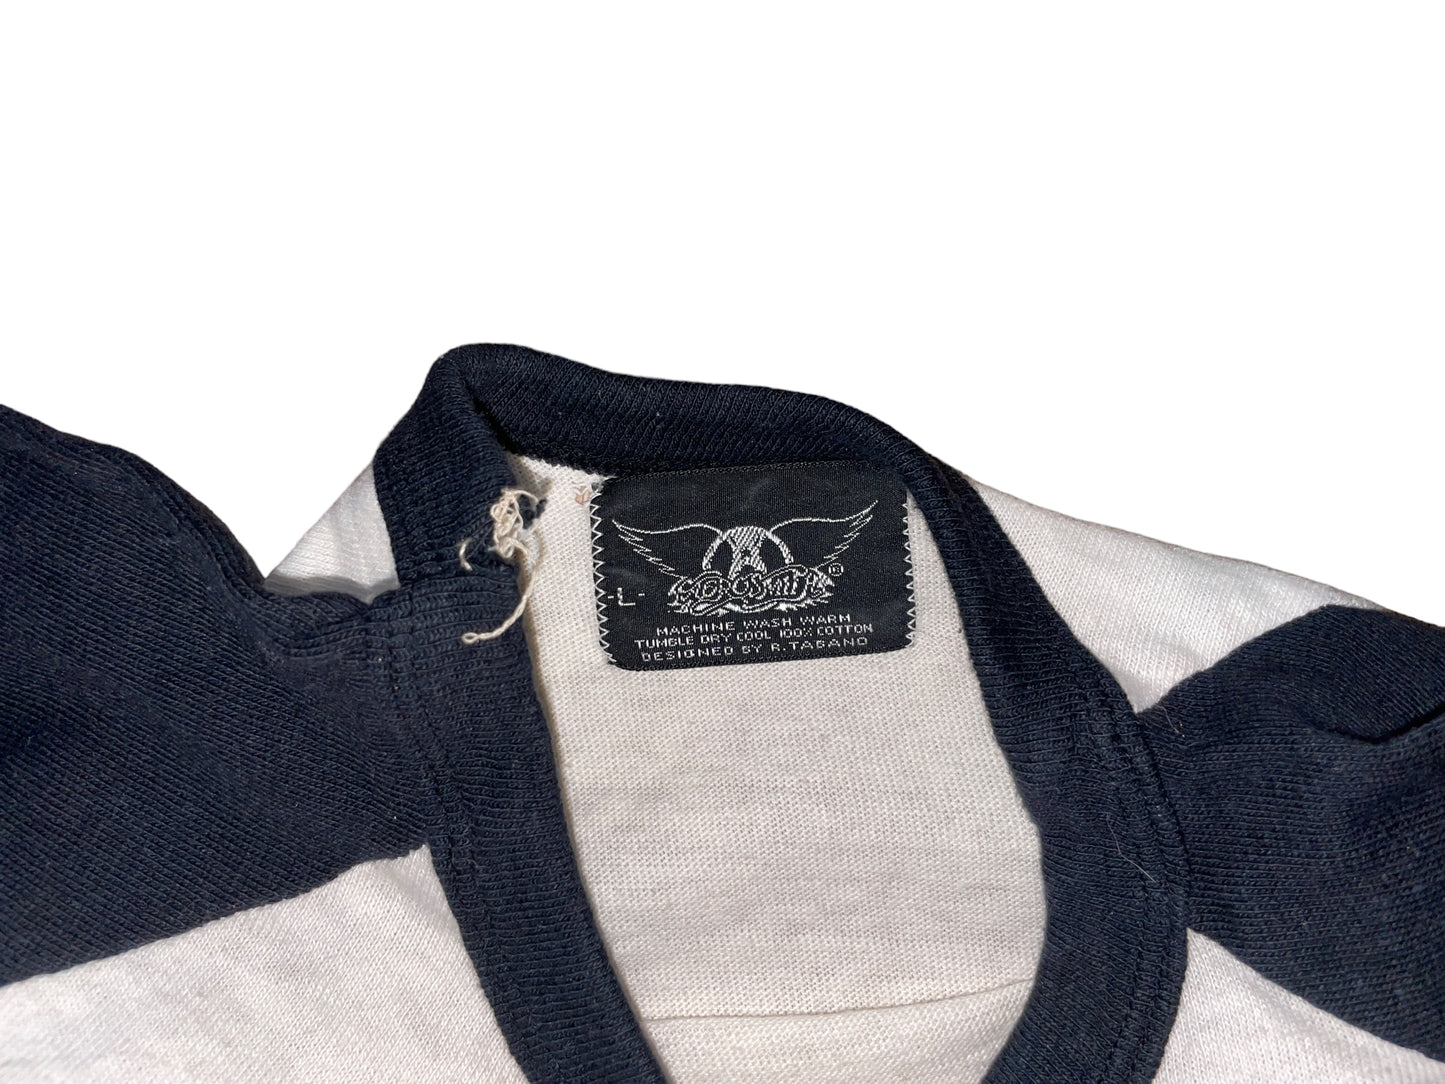 Vintage 1978 Aerosmith Shirt